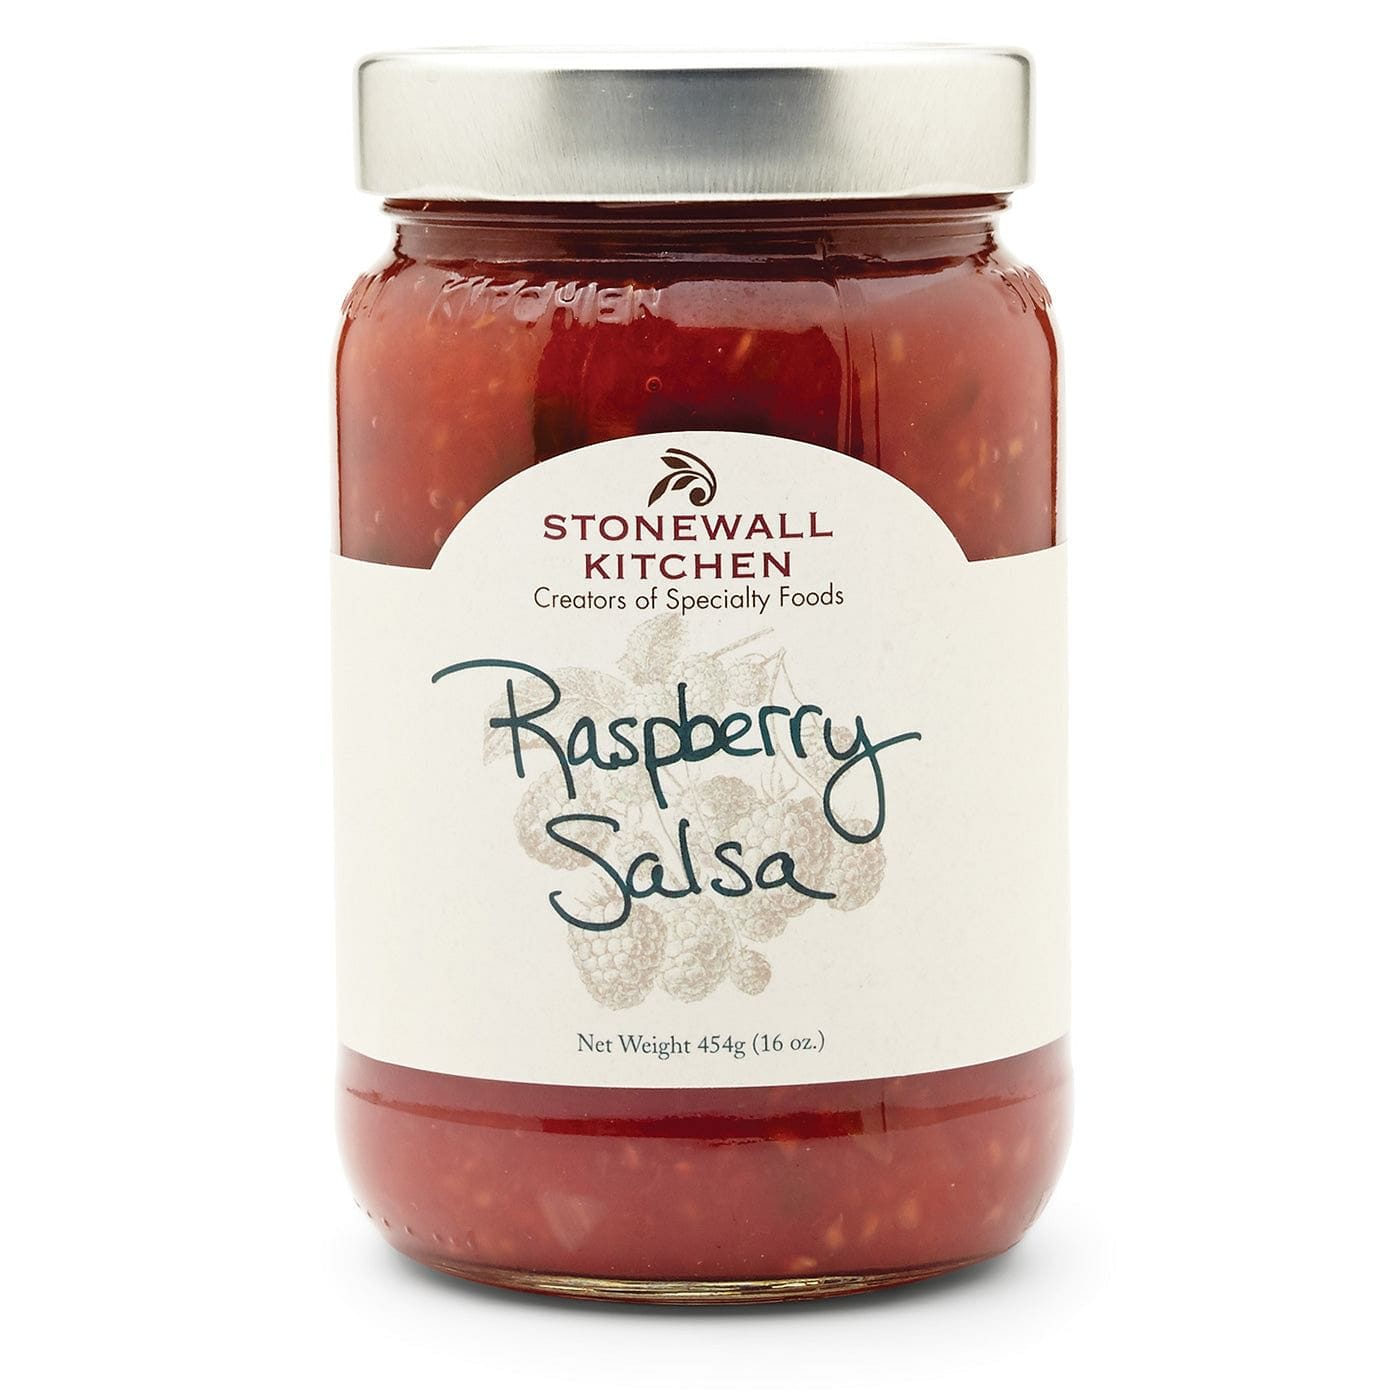 Stonewall Kitchen Raspberry Salsa  - 16 oz jar - Shelburne Country Store